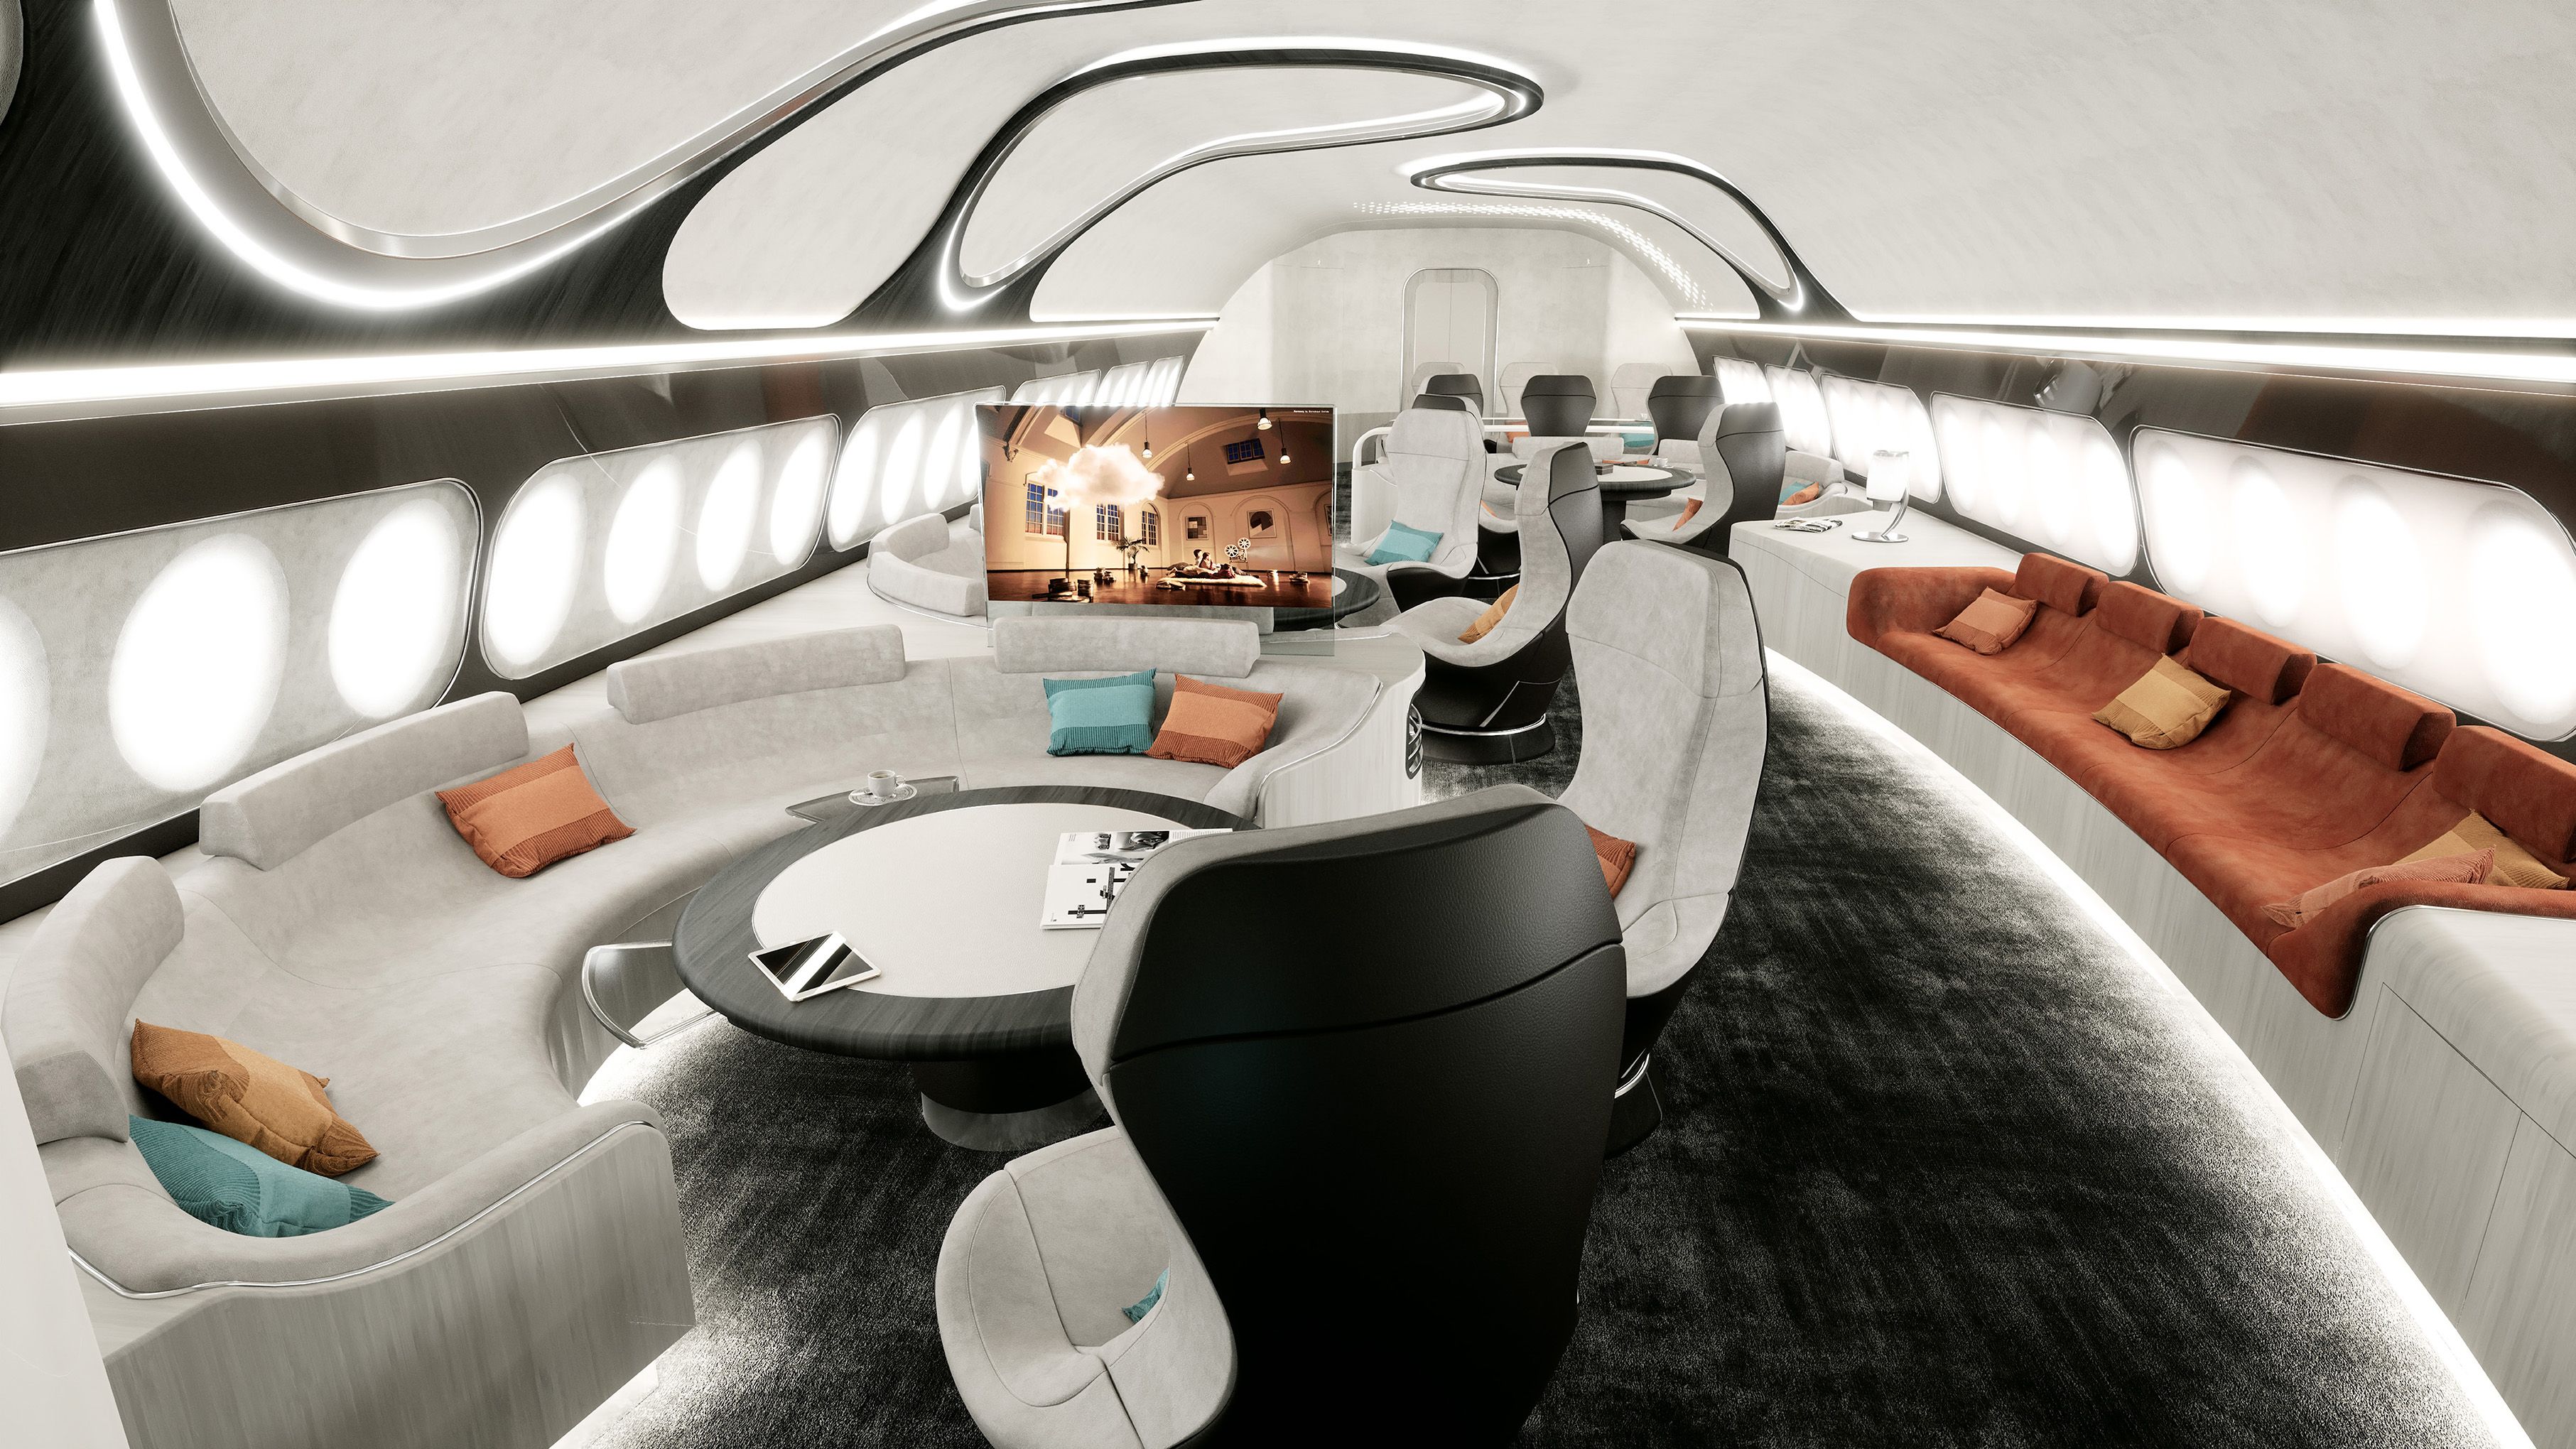 ACJ330neo Lounge space